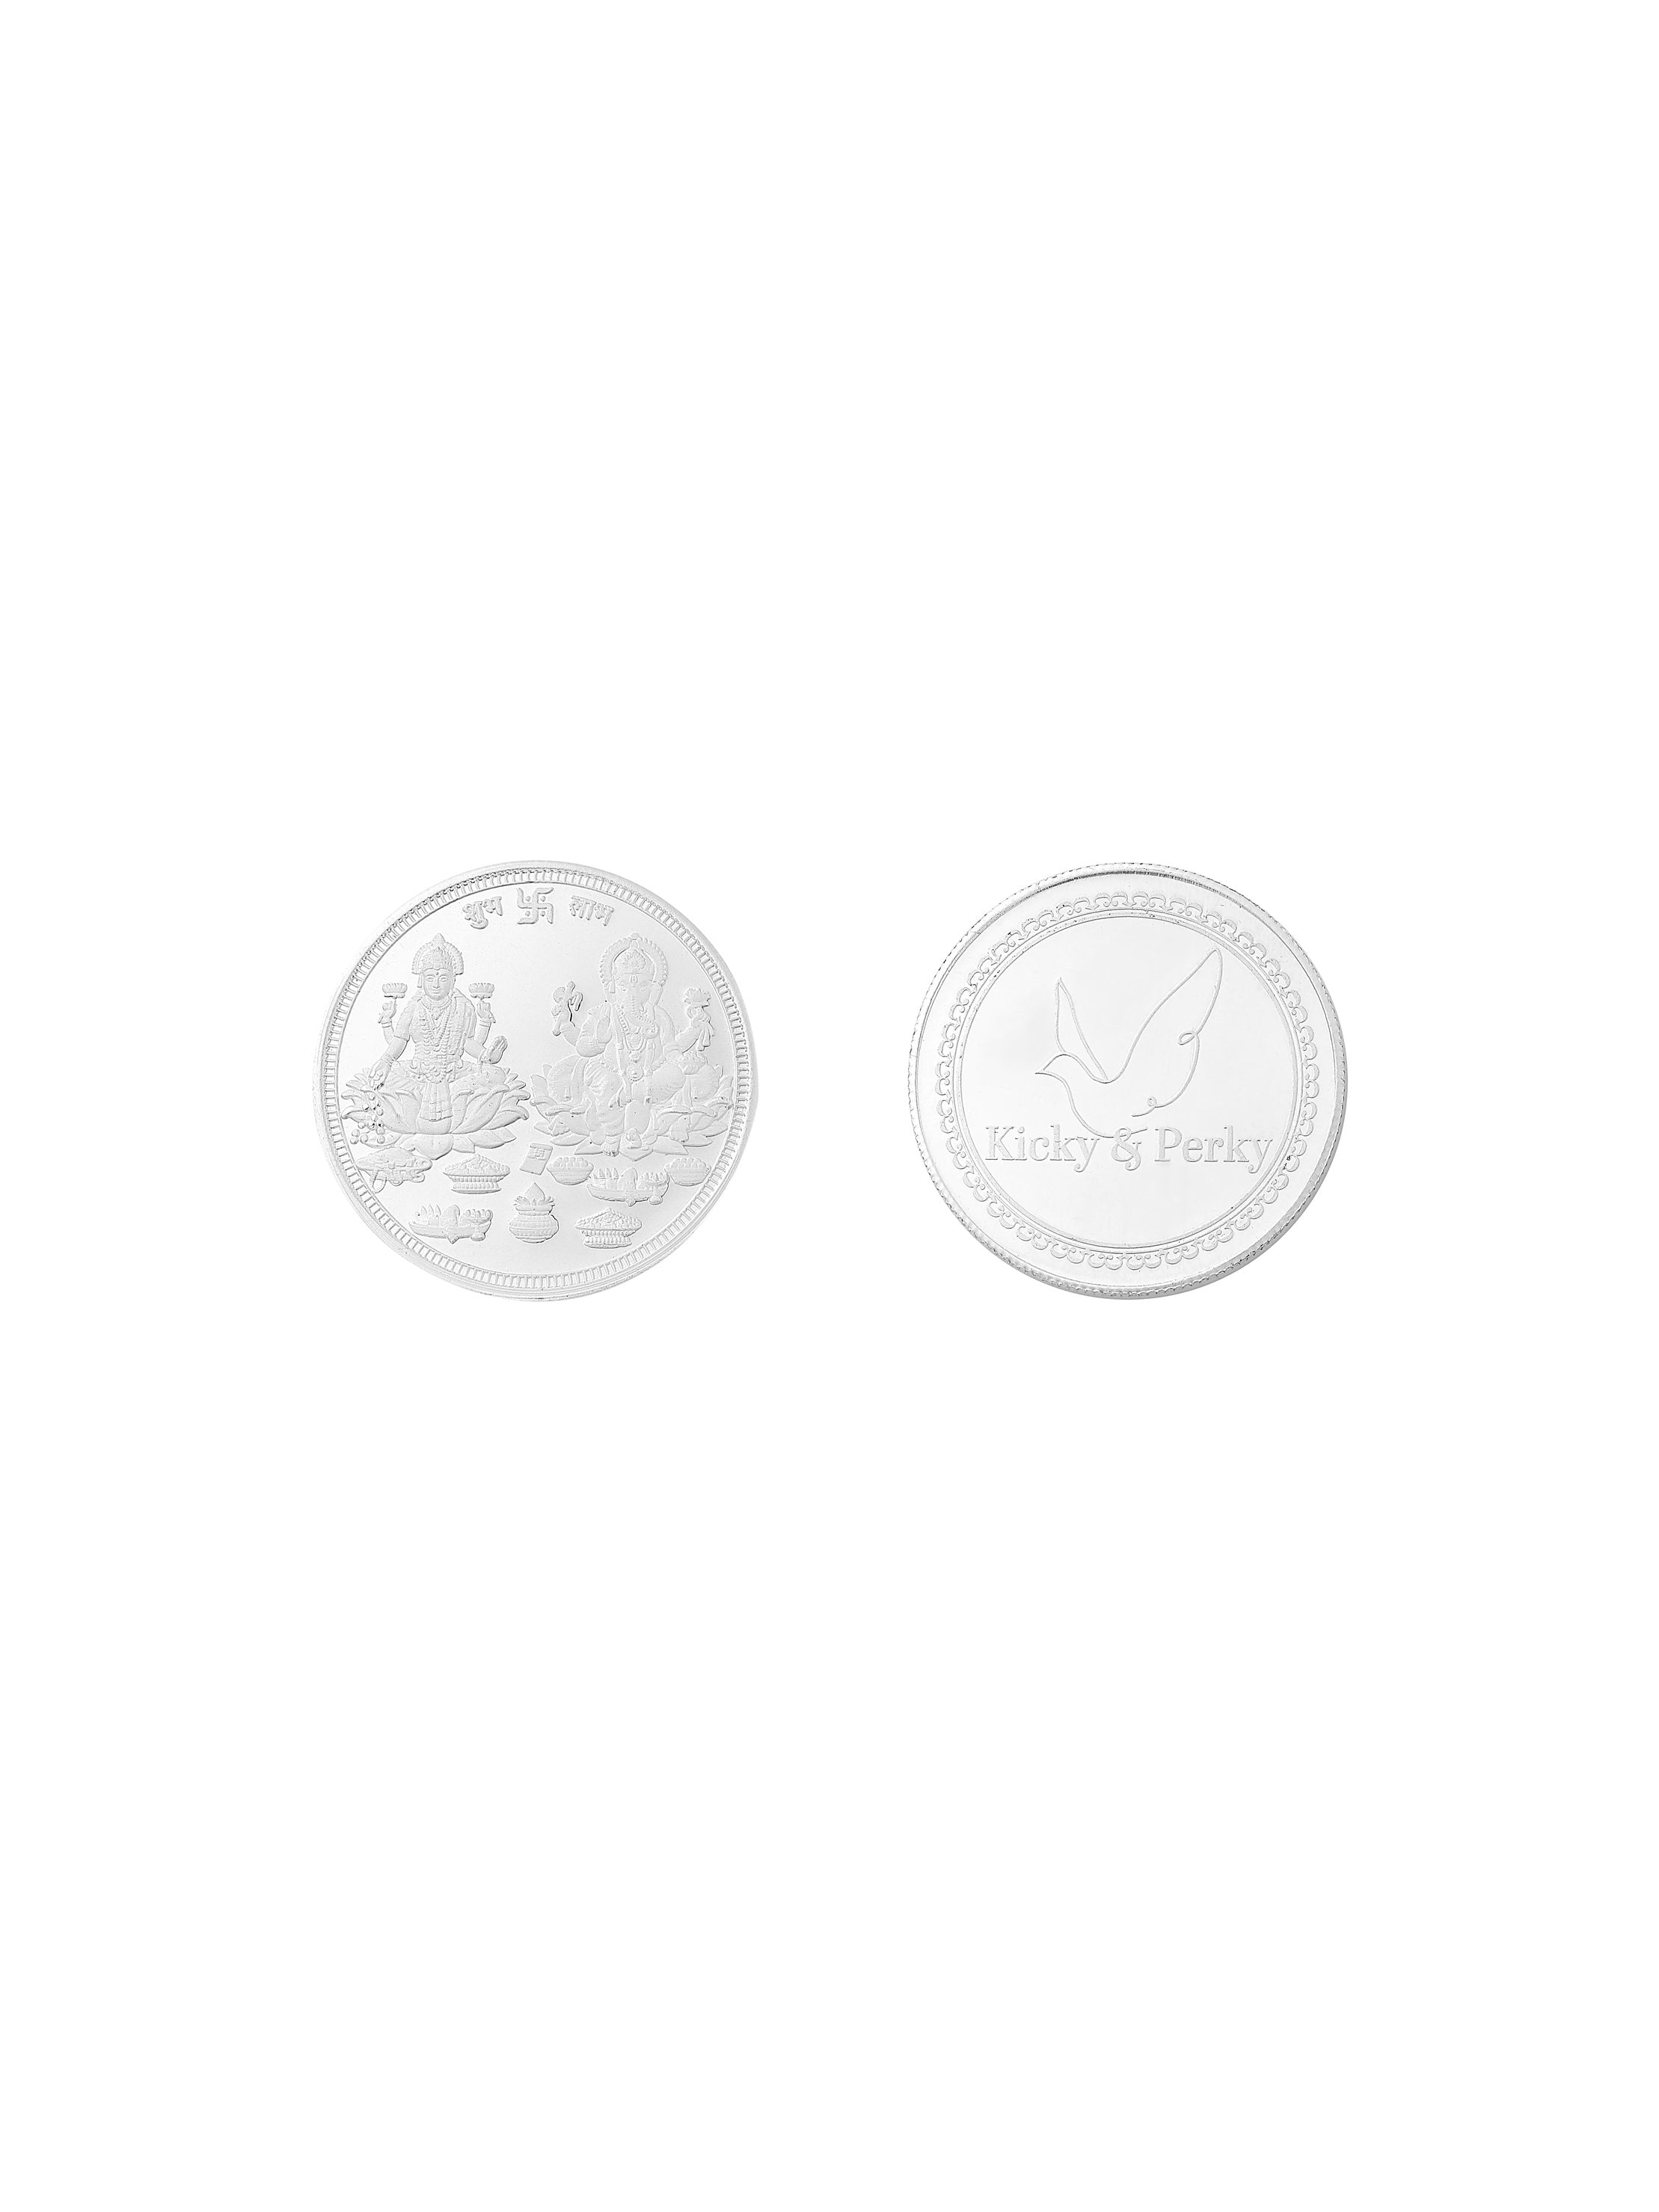 20g Pure Silver Coin